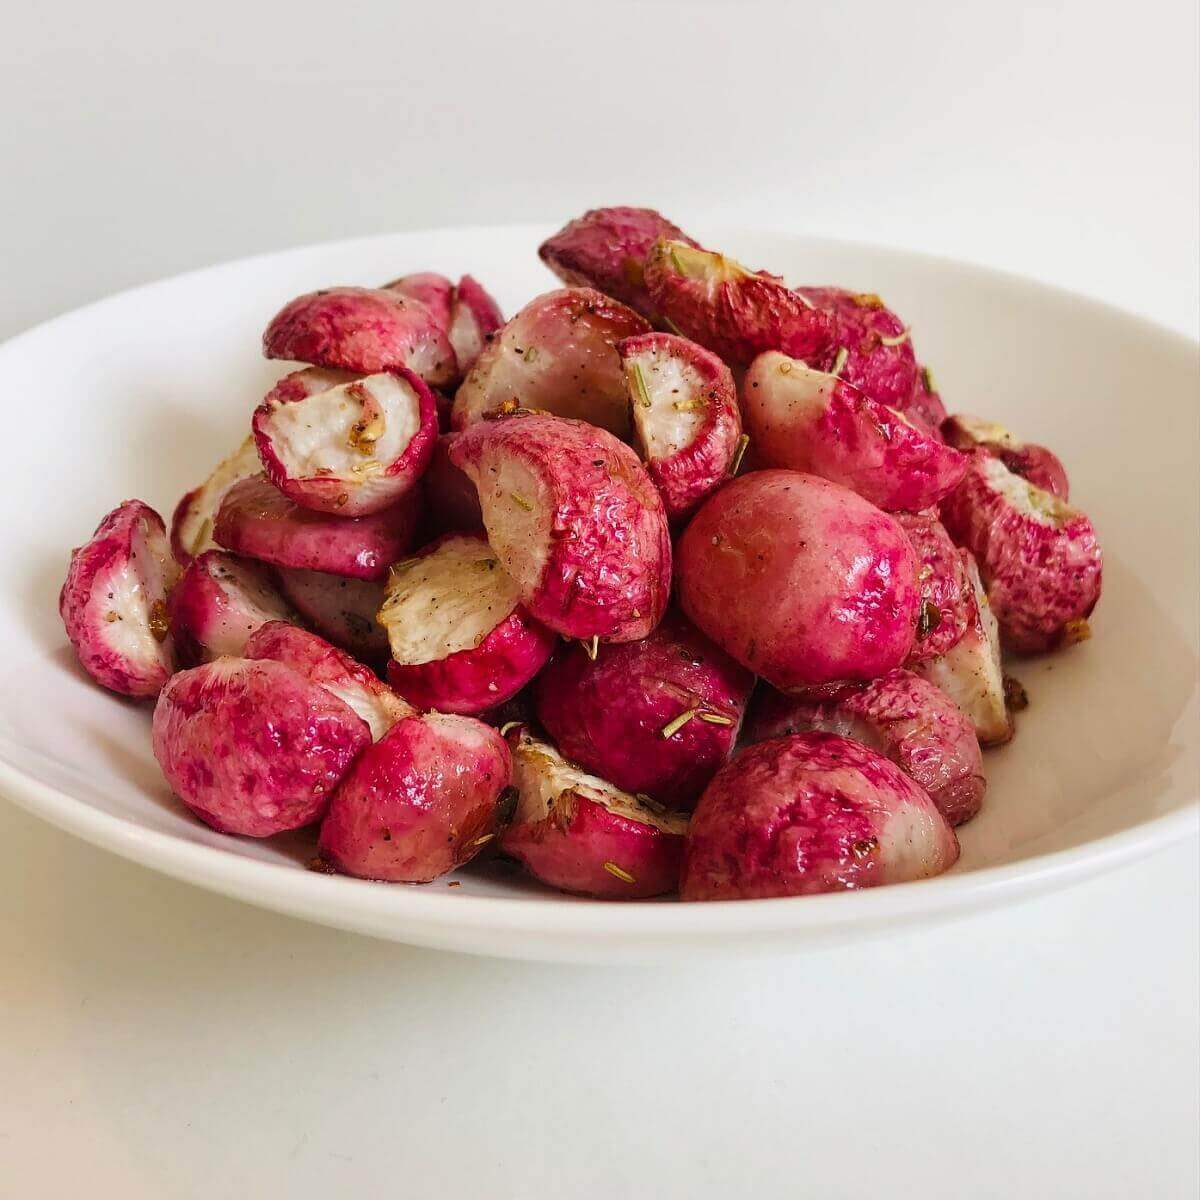 A bowl full of roasted radishes.